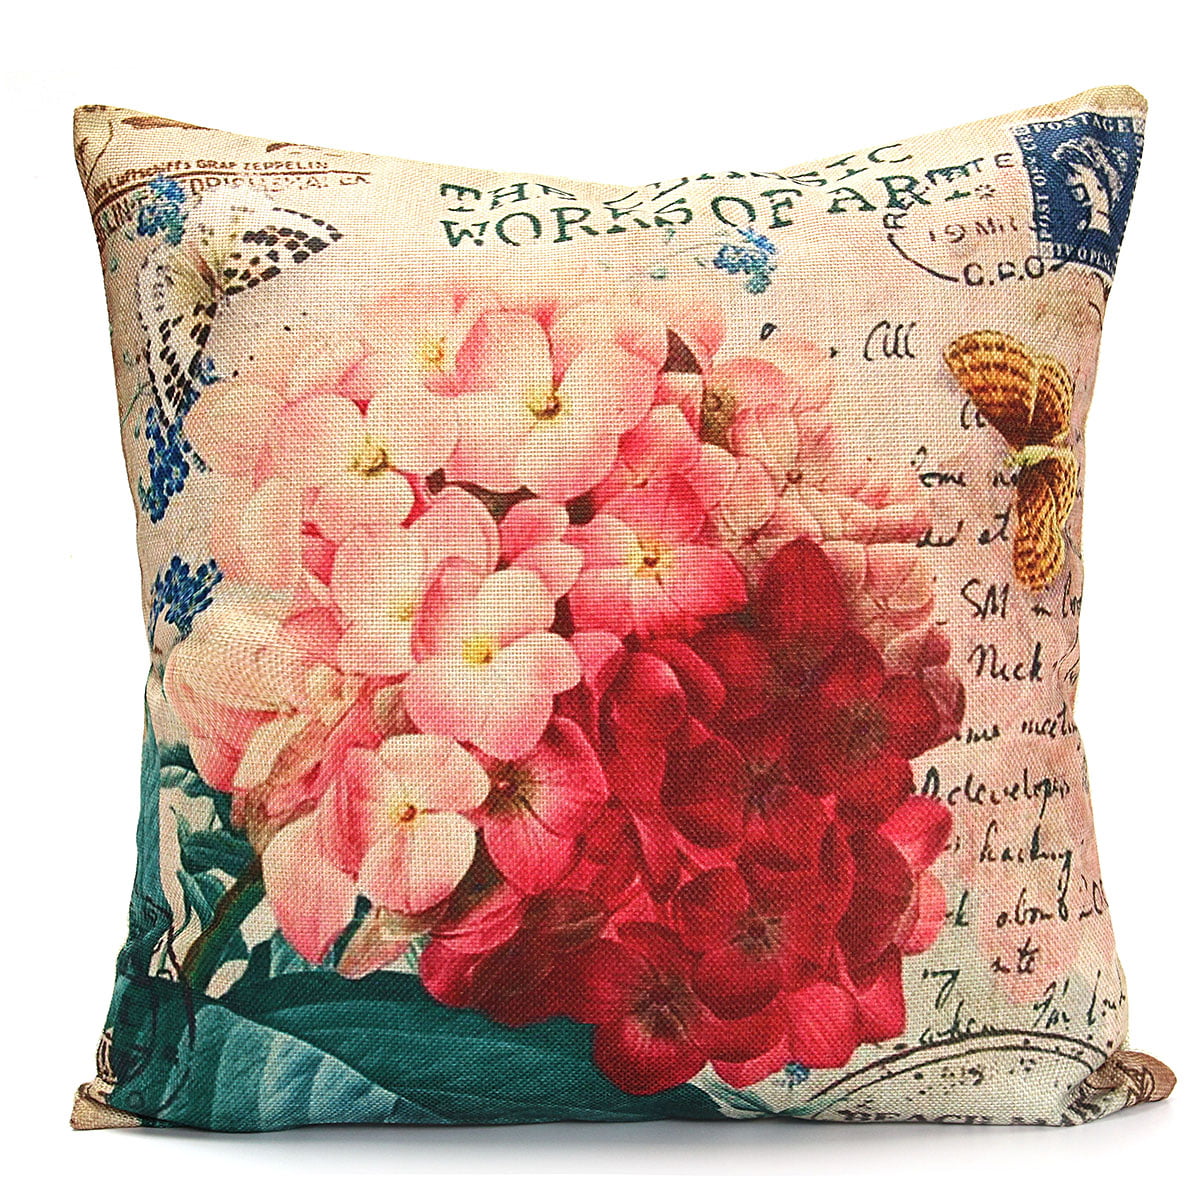 Retro Flower Throw Decorative Pillow Case Pillow Cover Sofa Car Cushion Cover 